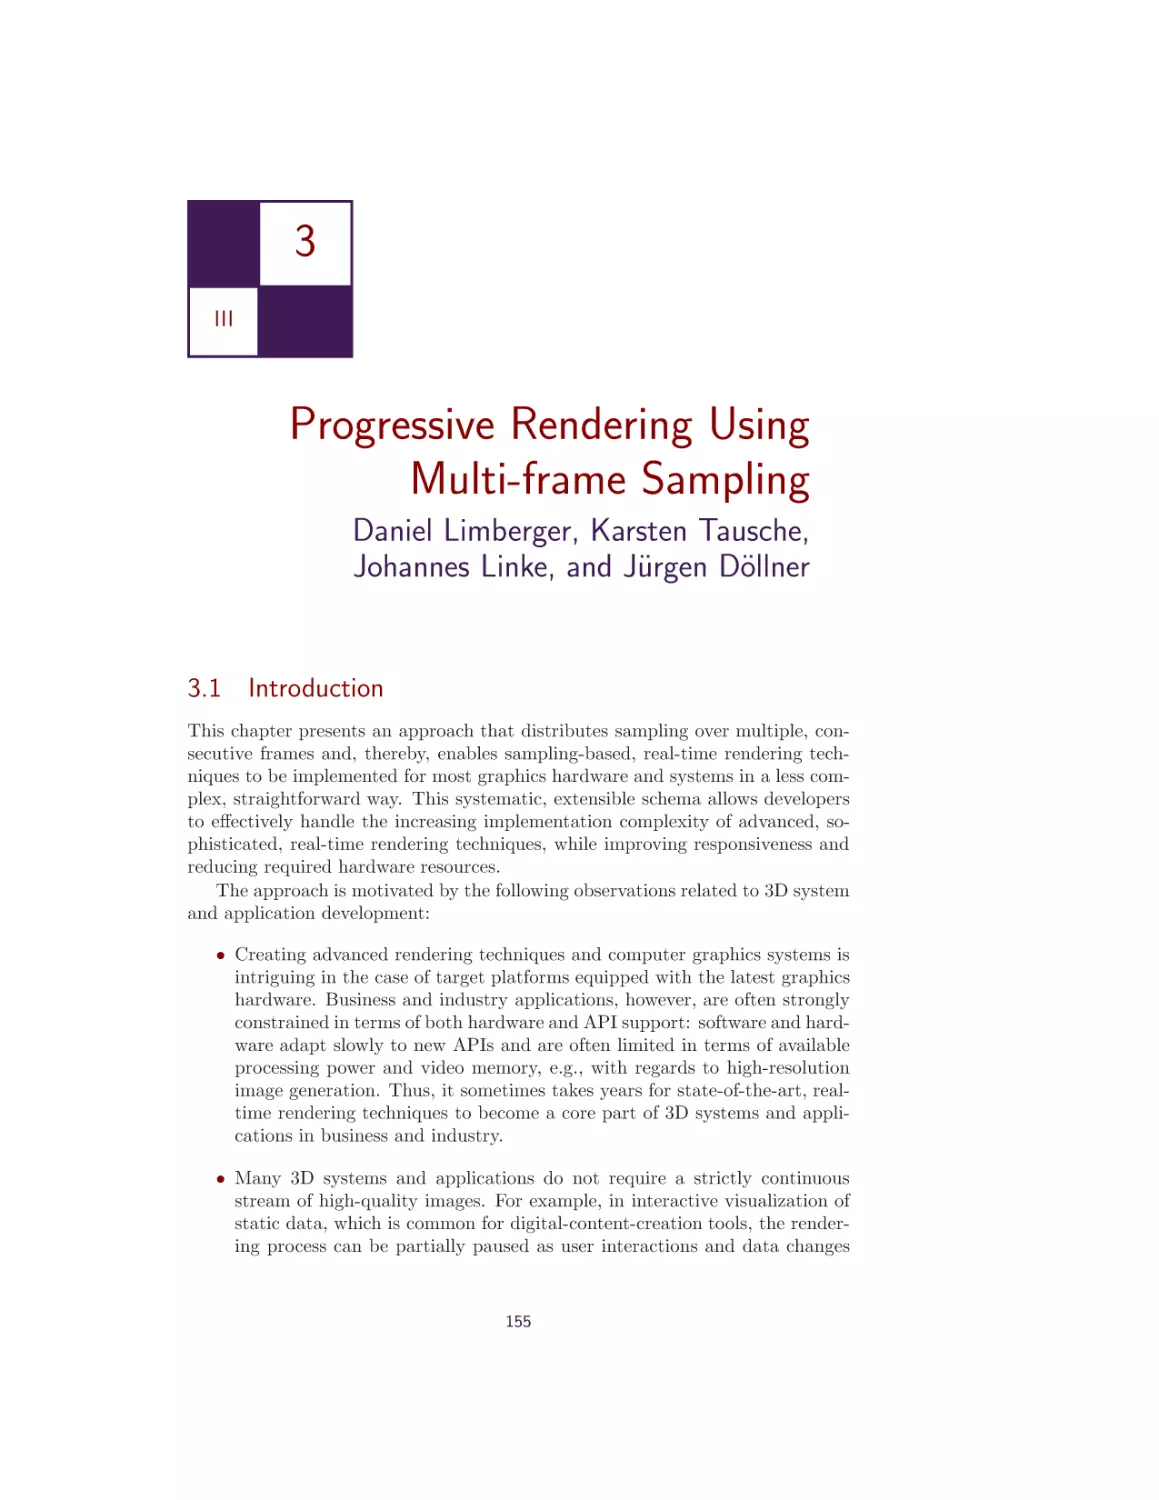 3. Progressive Rendering Using Multi-frame Sampling